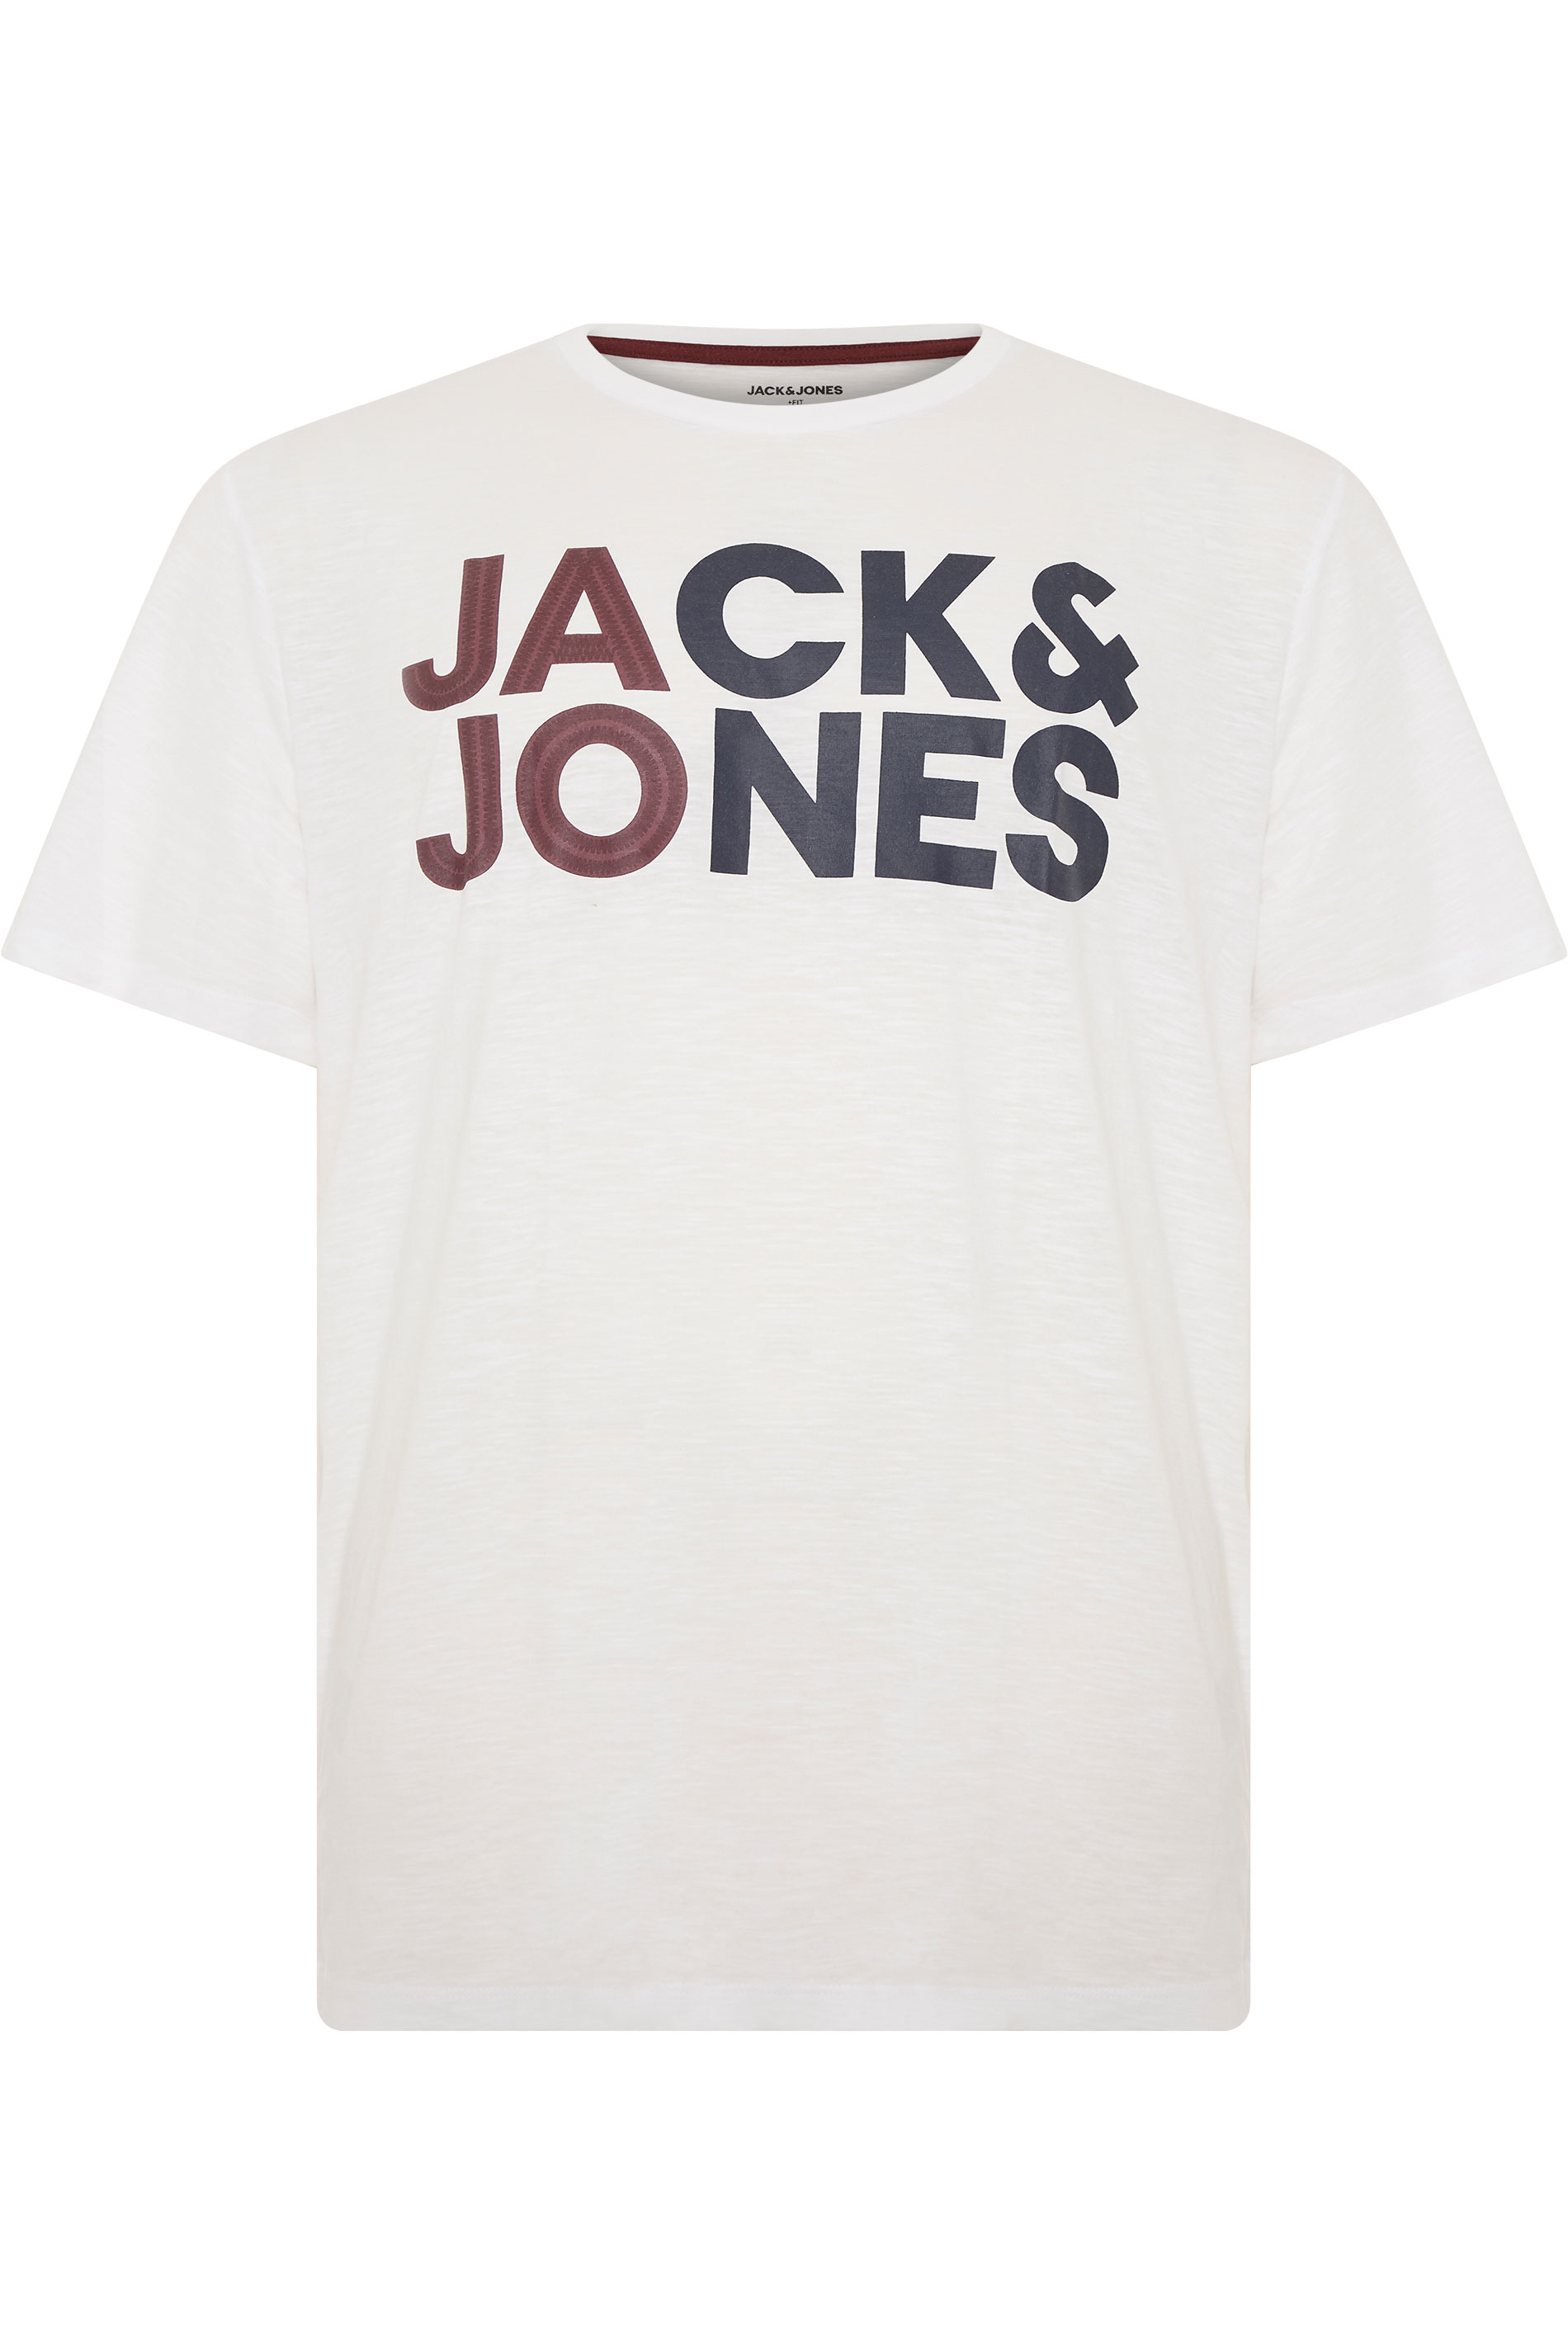 JACK & JONES White Marl Logo Crew Neck T-Shirt_F.jpg